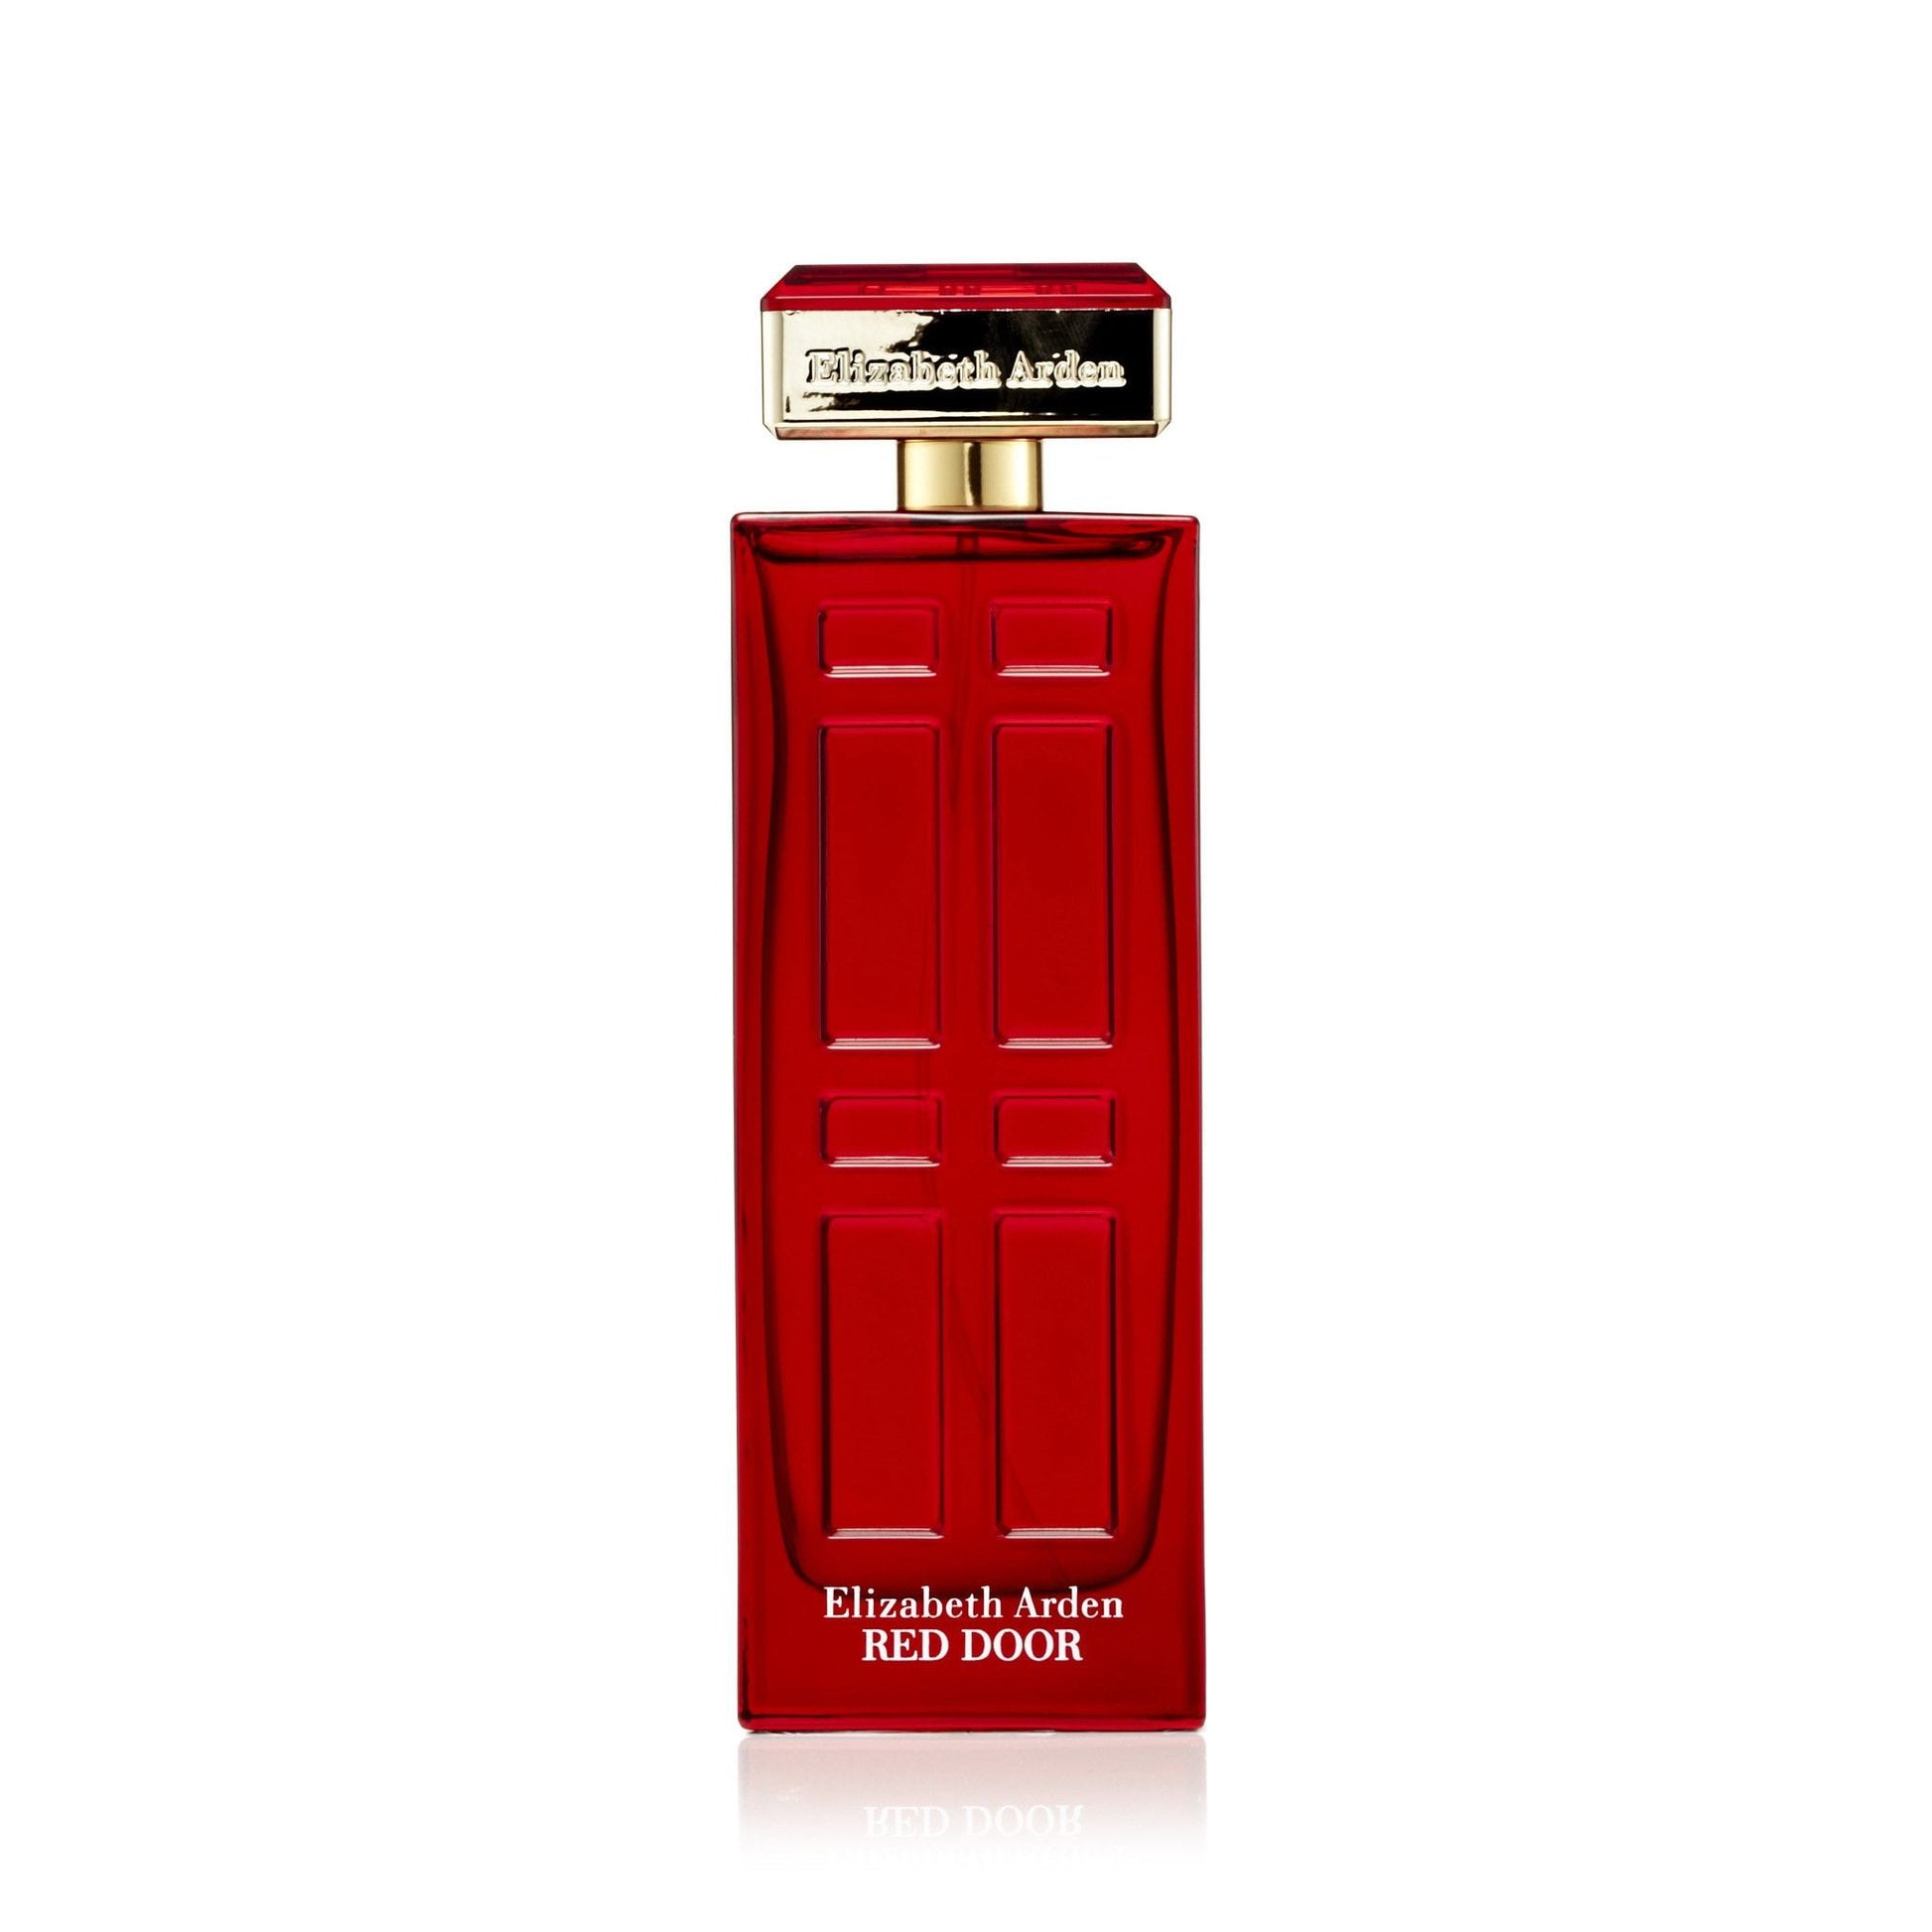 Red Door Eau de Toilette Spray for Women by Elizabeth Arden, Product image 1